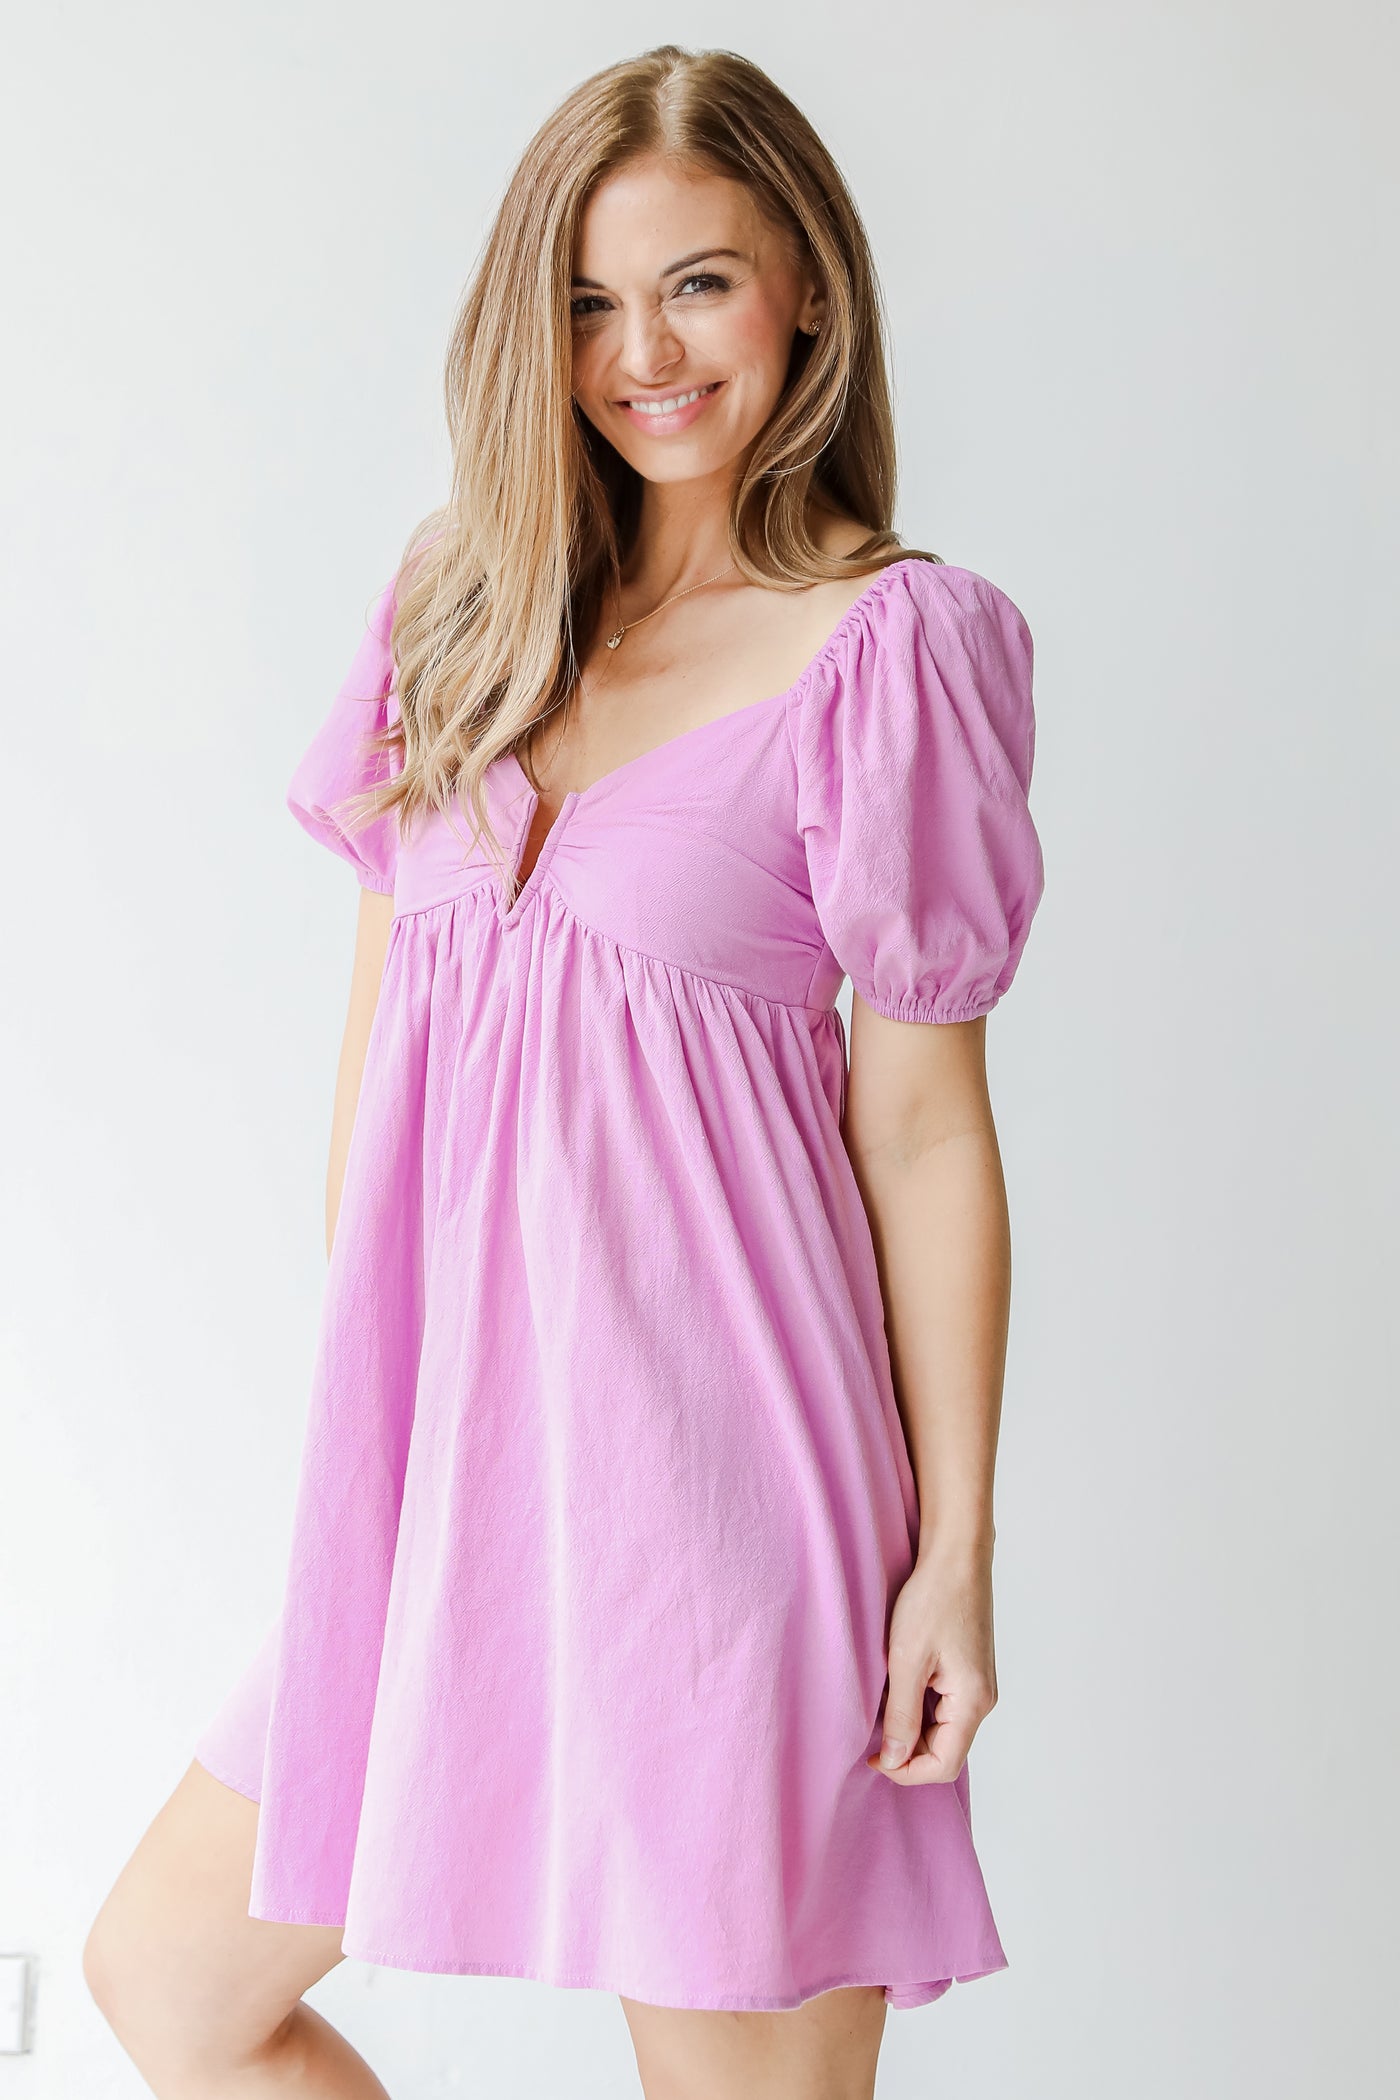 Babydoll Mini Dress in lavender side view